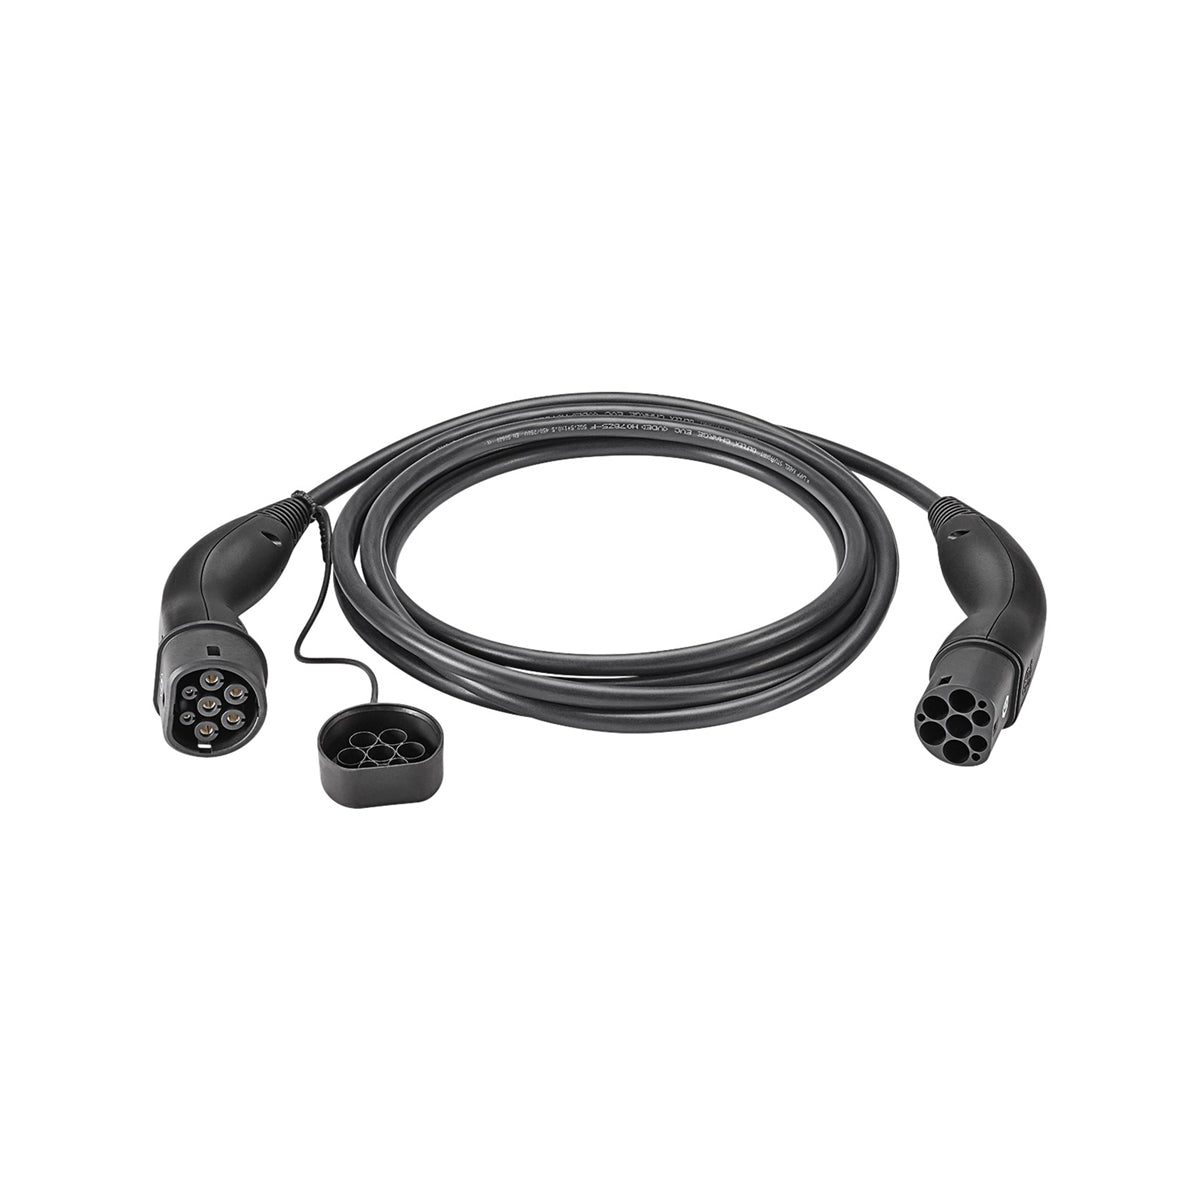 LAPP EV Charge Cable Type 2 (22kW-3P-32A) 5m - Black.